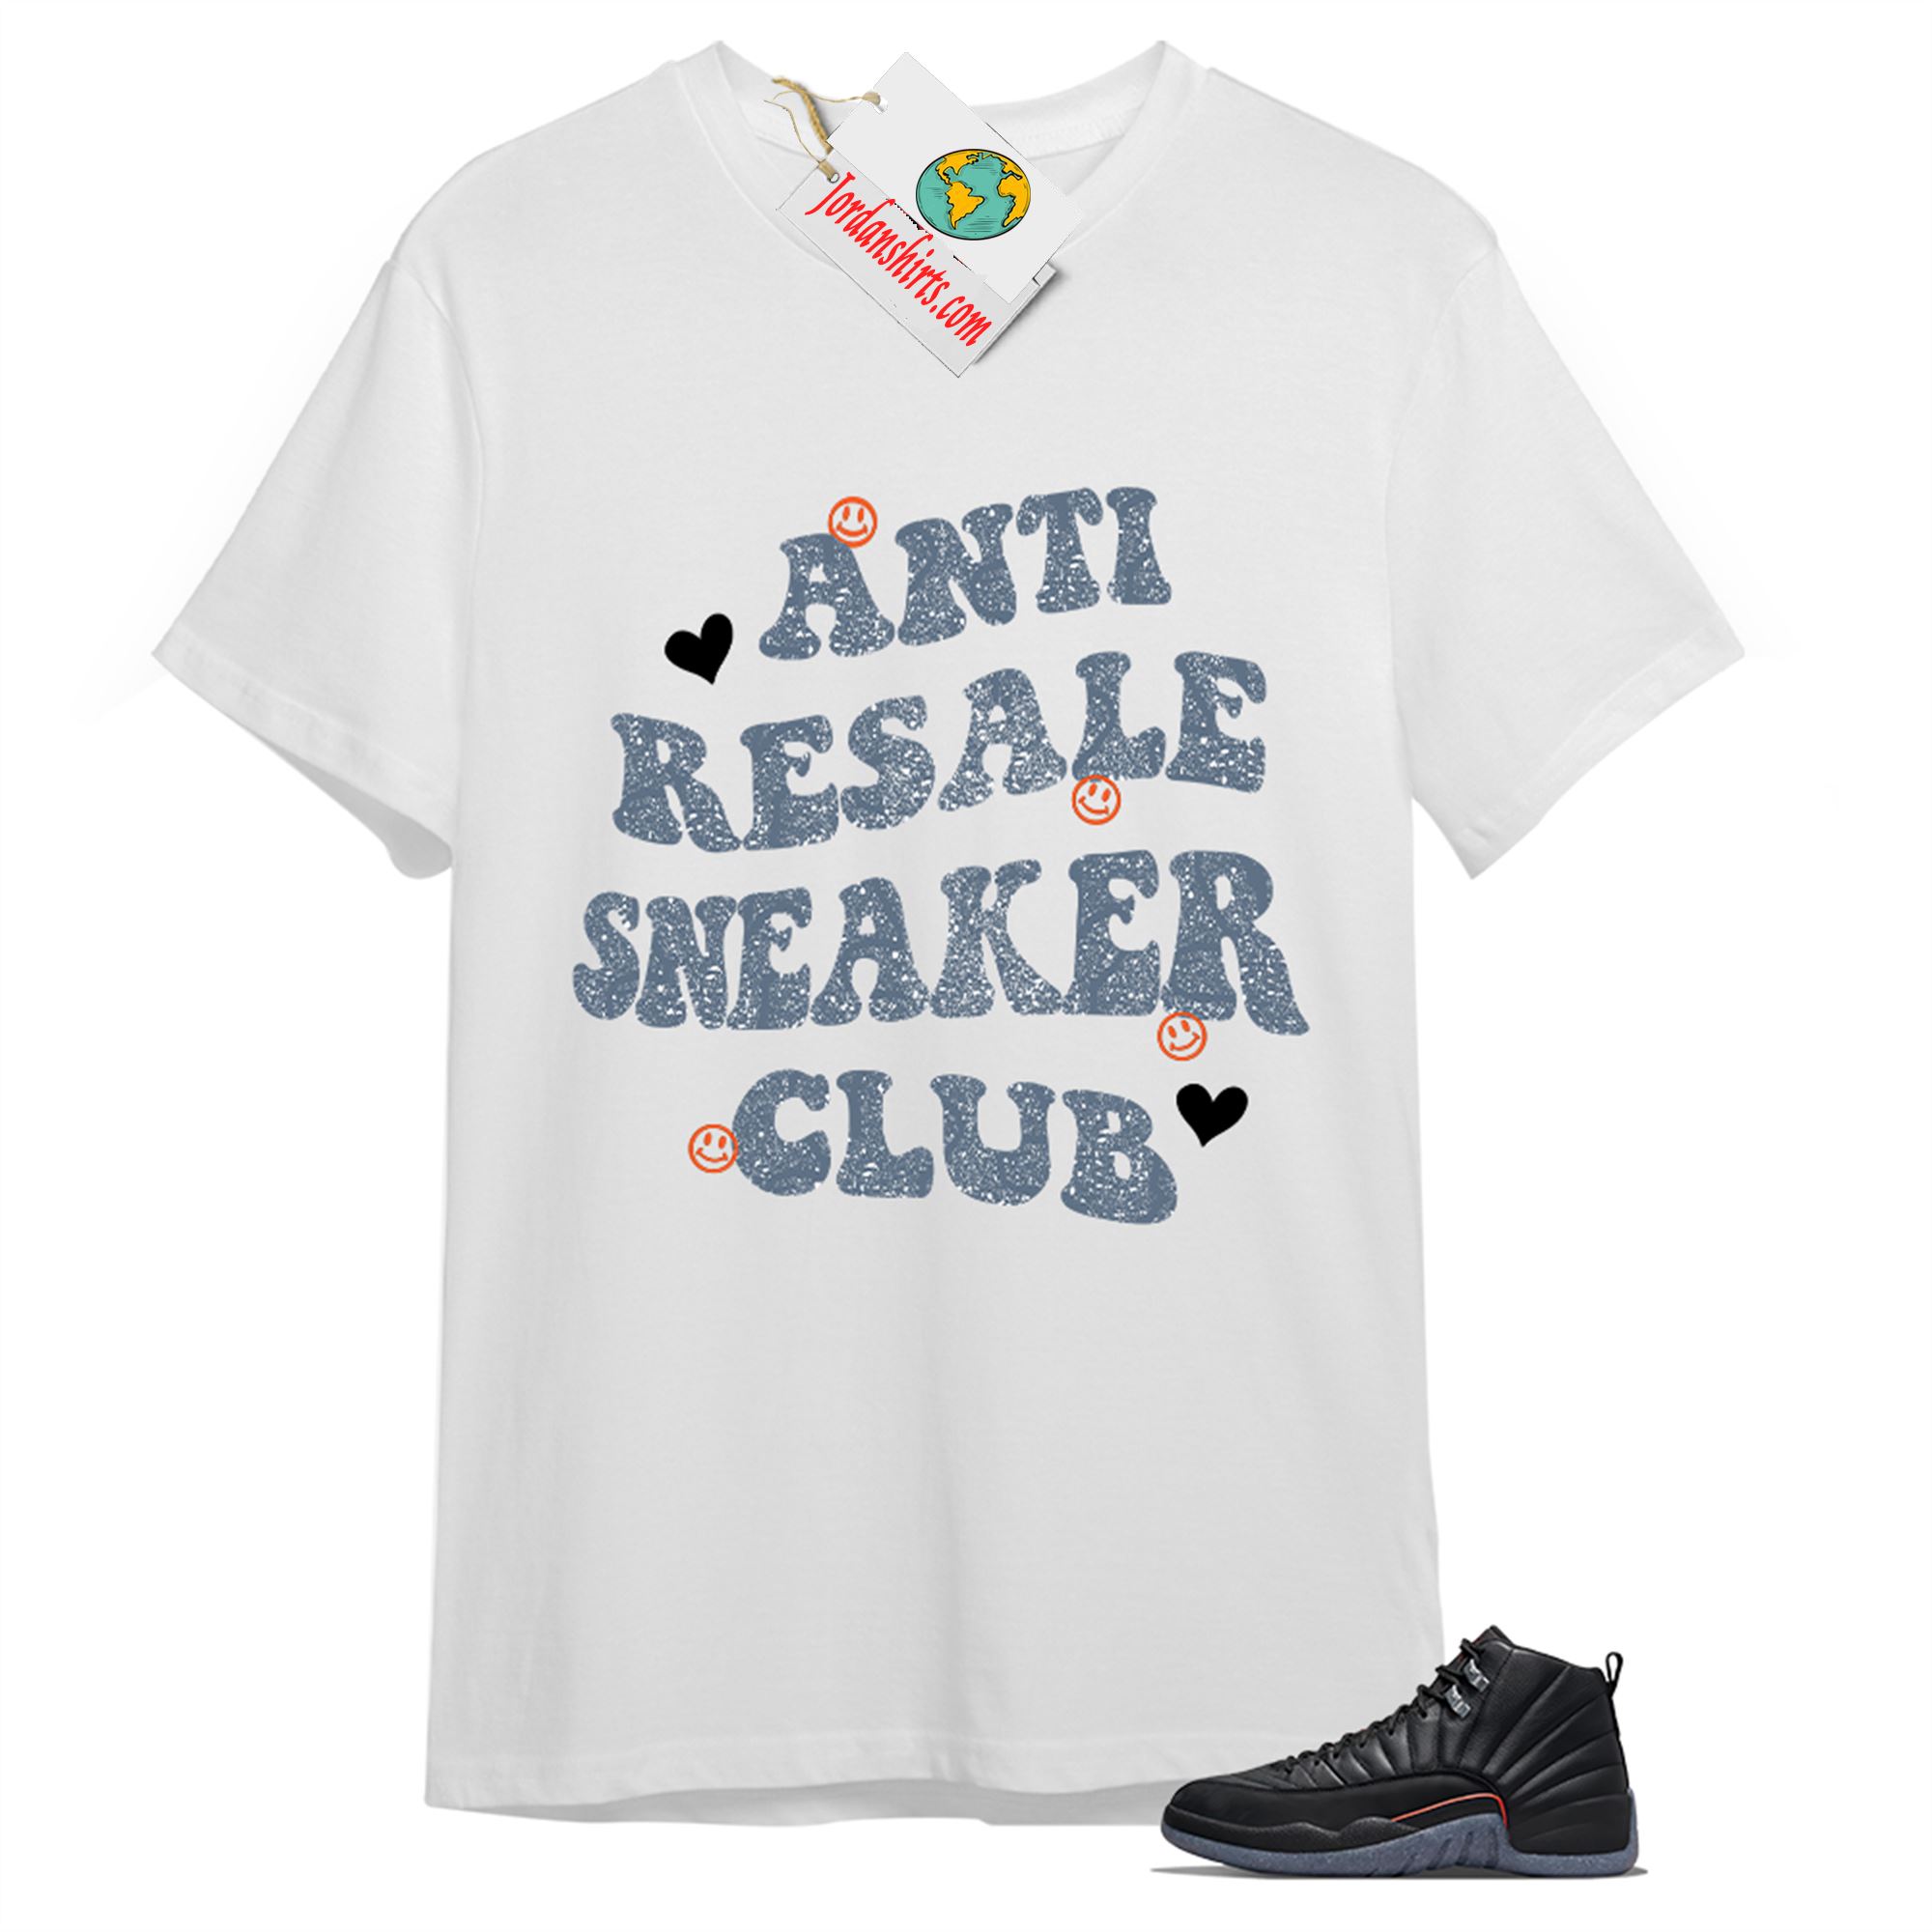 Jordan 12 Shirt, Anti Resale Sneaker Club White T-shirt Air Jordan 12 Utility Grind 12s Plus Size Up To 5xl